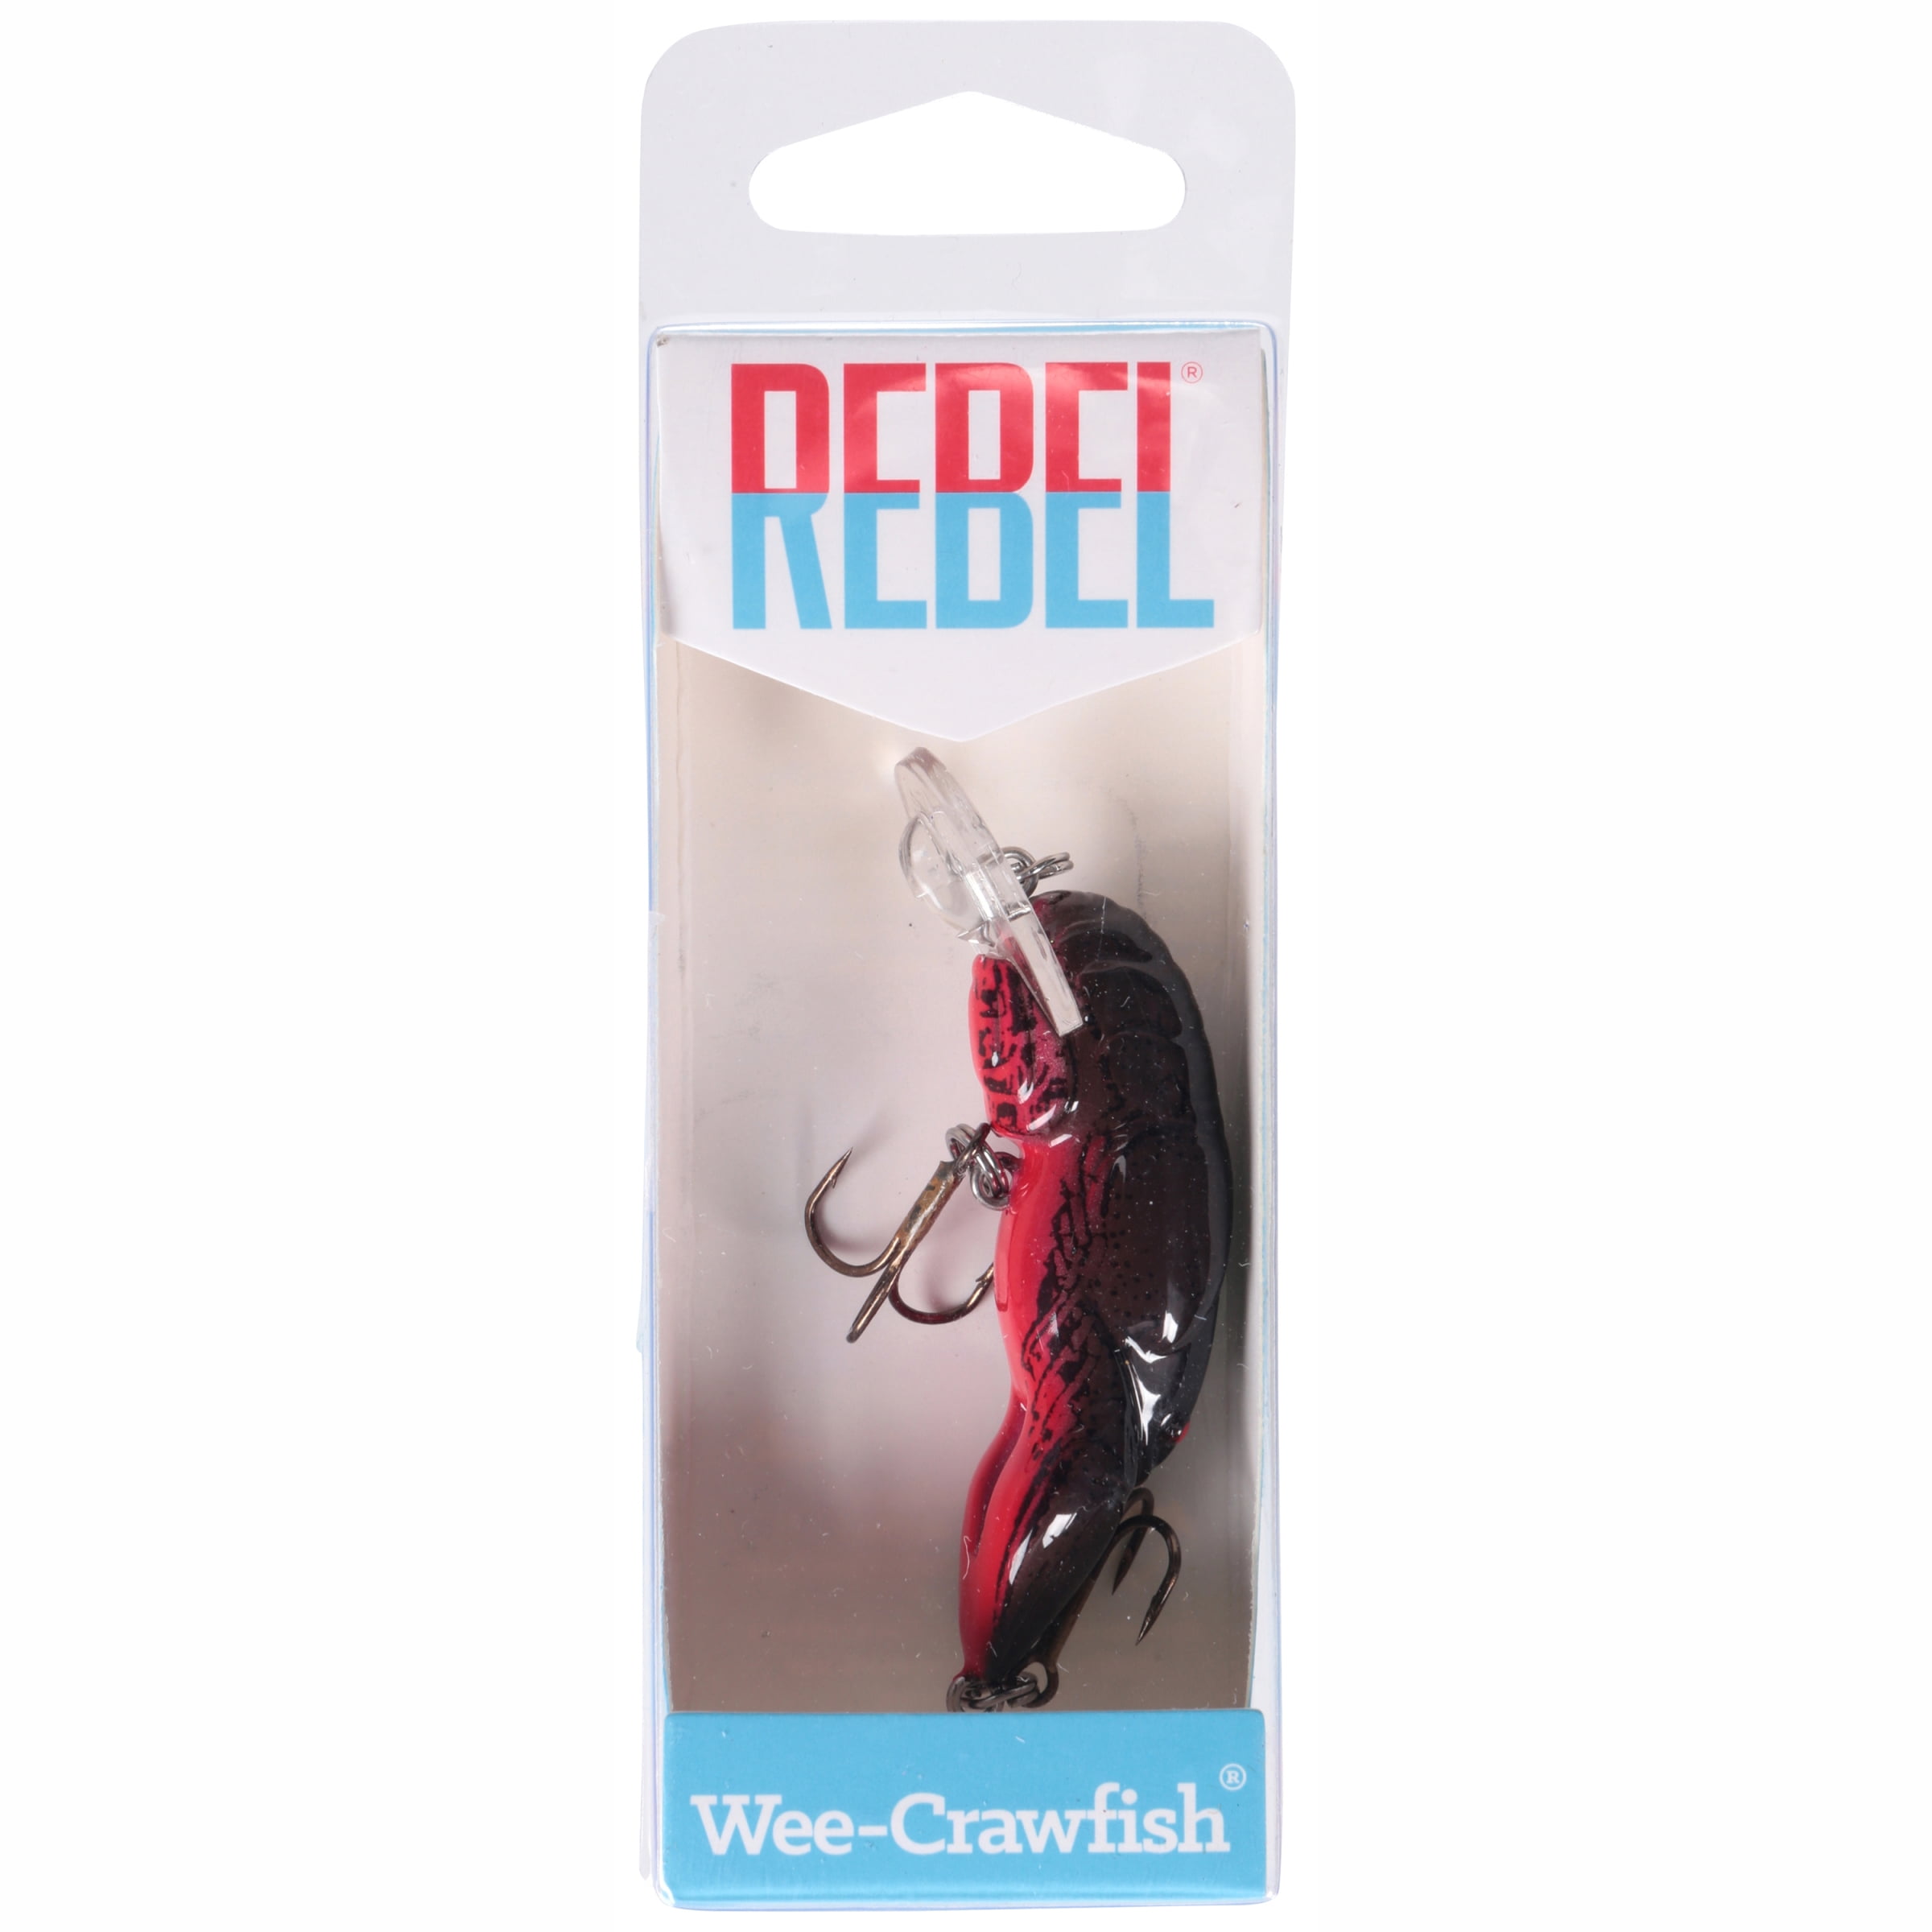 Rebel Lures Original Realistic Crawfish Crankbait Fishing Lure Ditch/Brown  Wee (5-7 ft Depth)